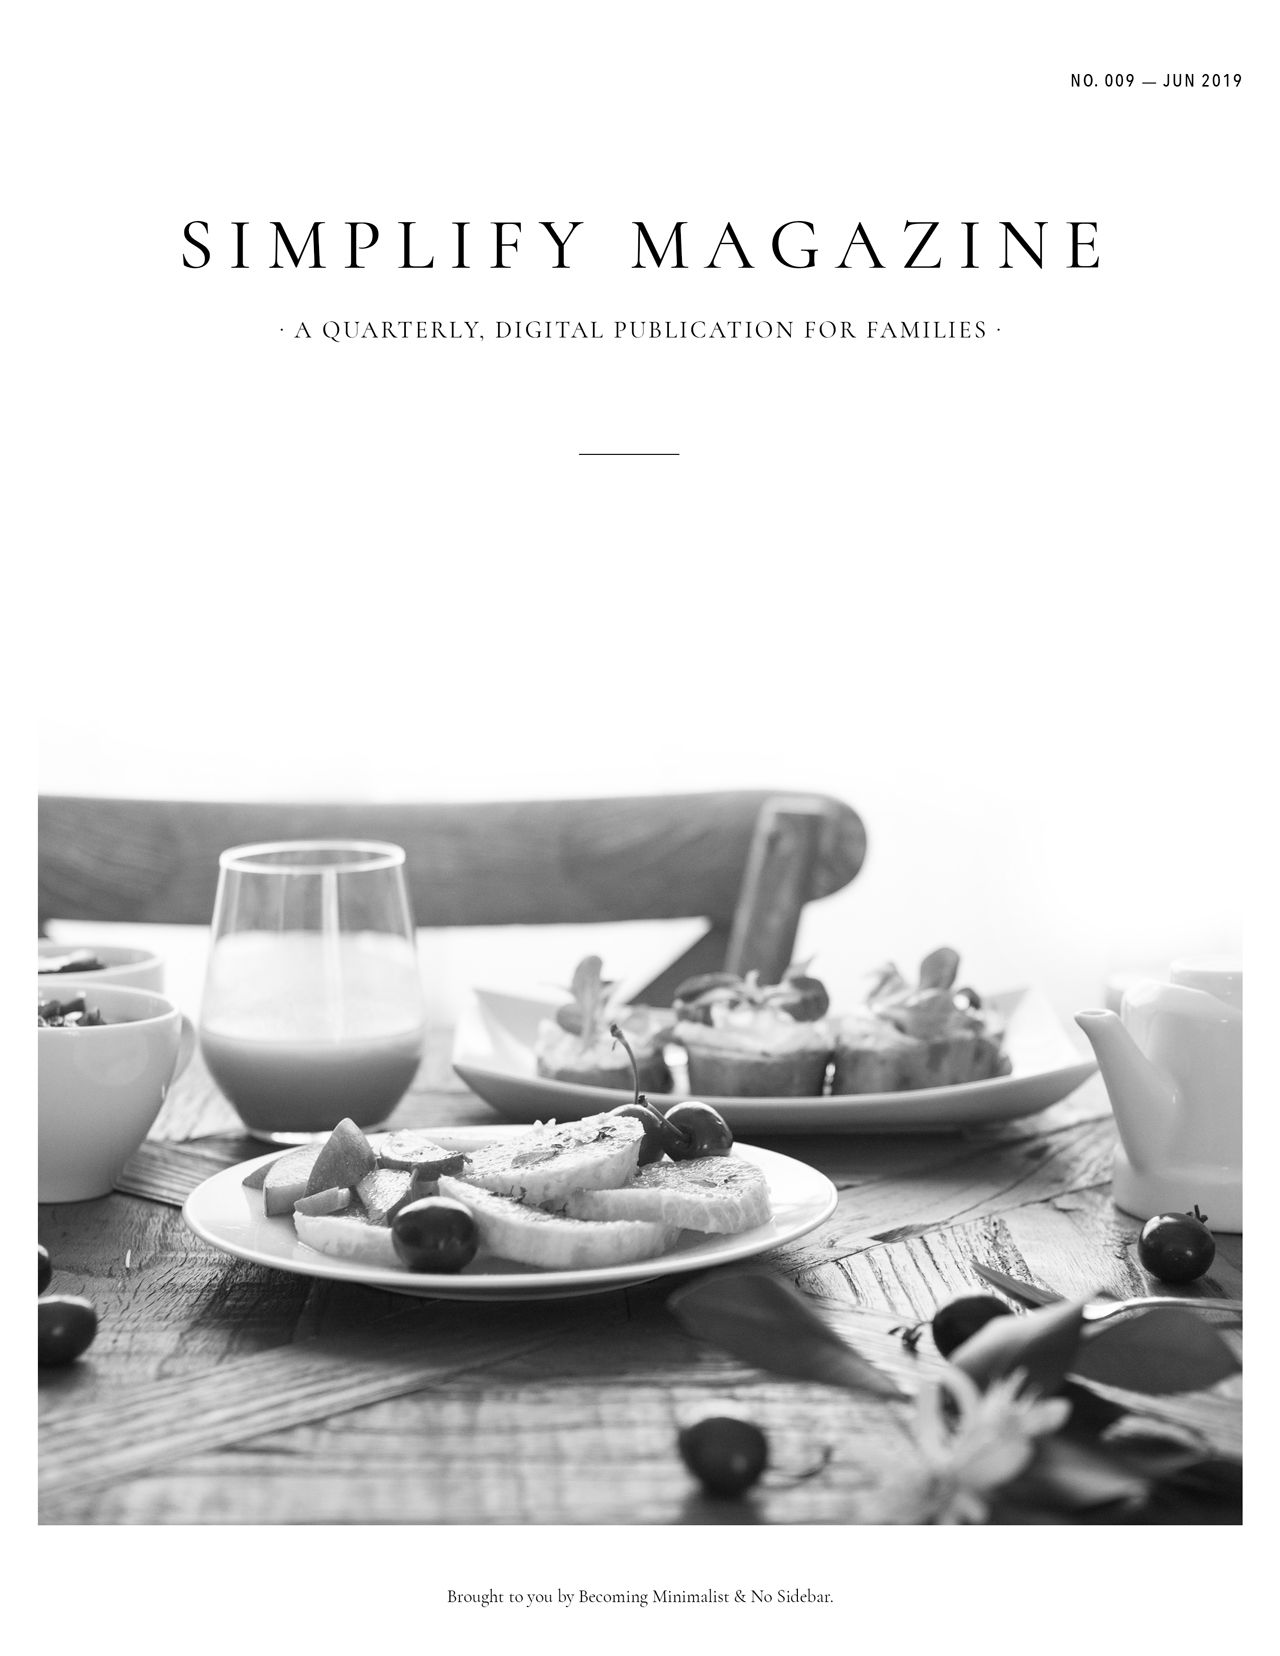 Simplify Magazine Issue #009